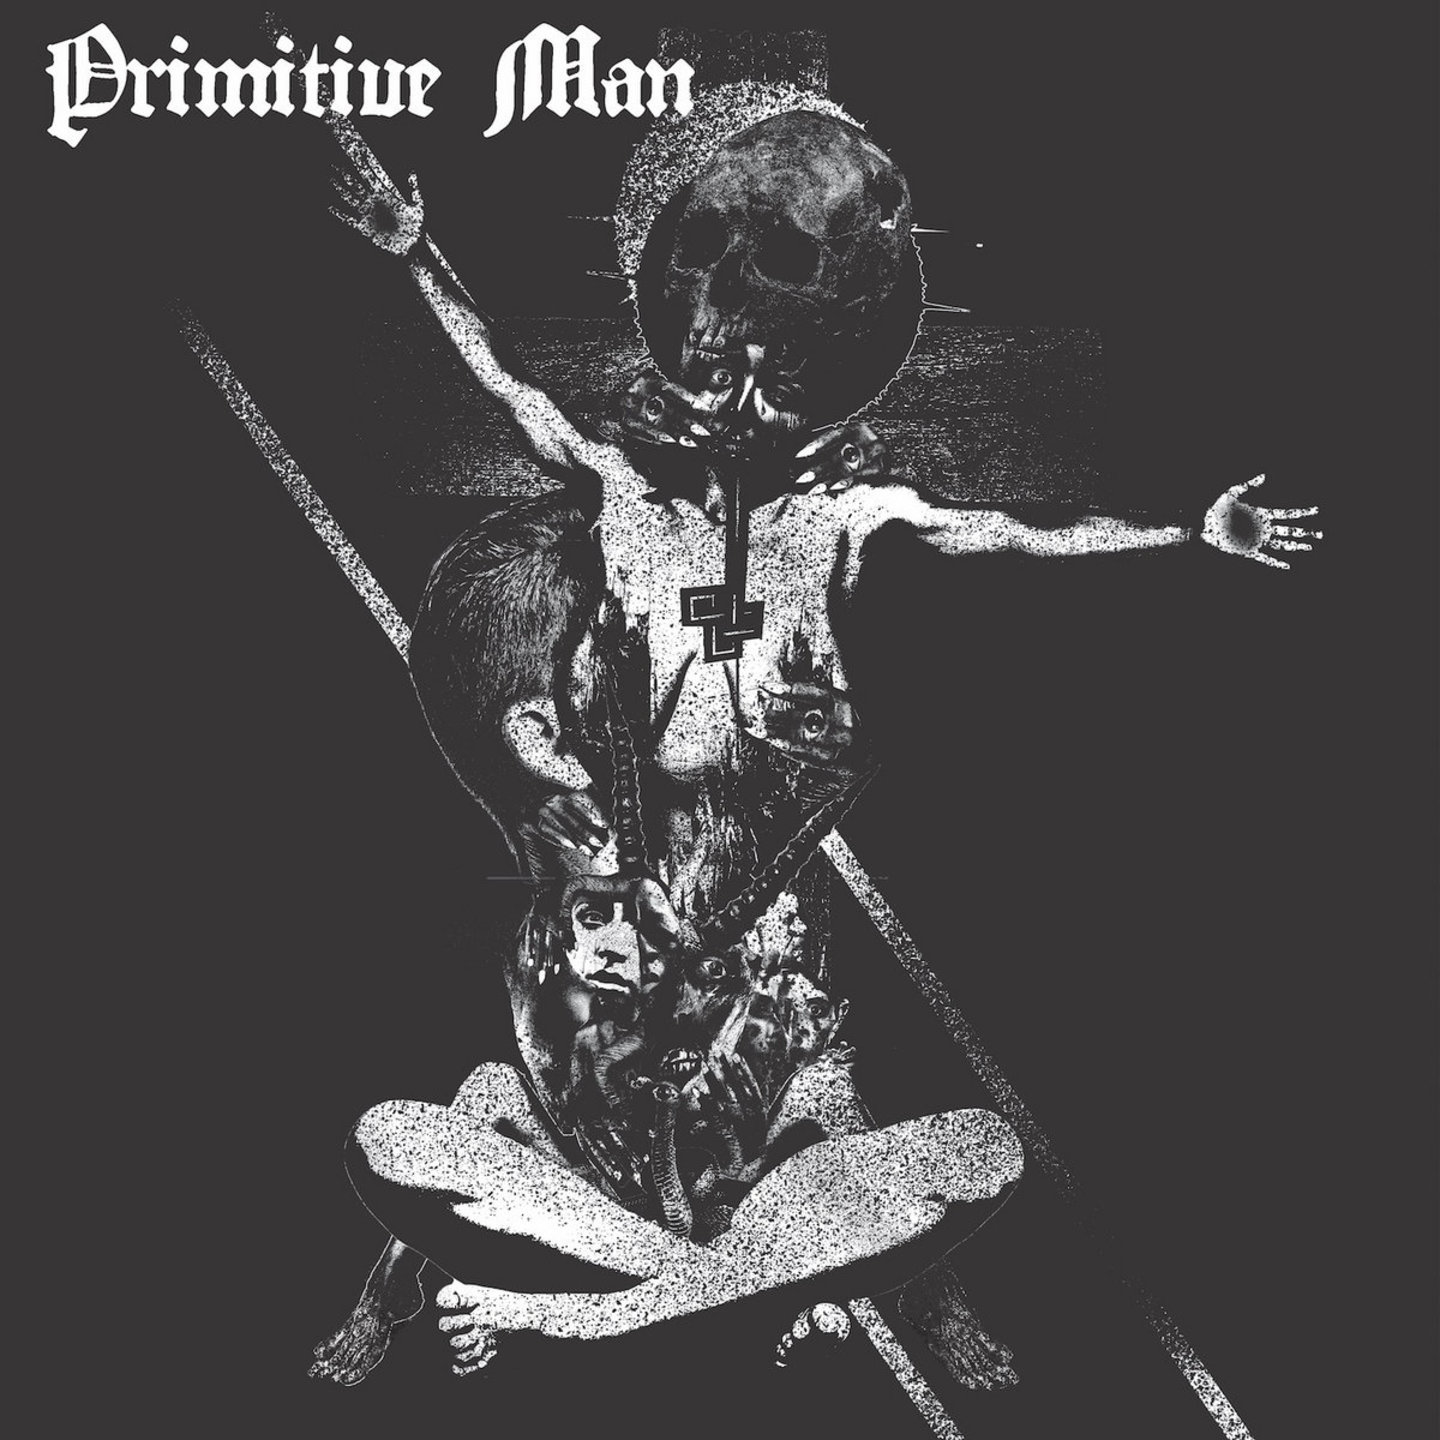 PRIMITIVE MAN - Insurmountable LP Clear with Black White Gold Splatter vinyl